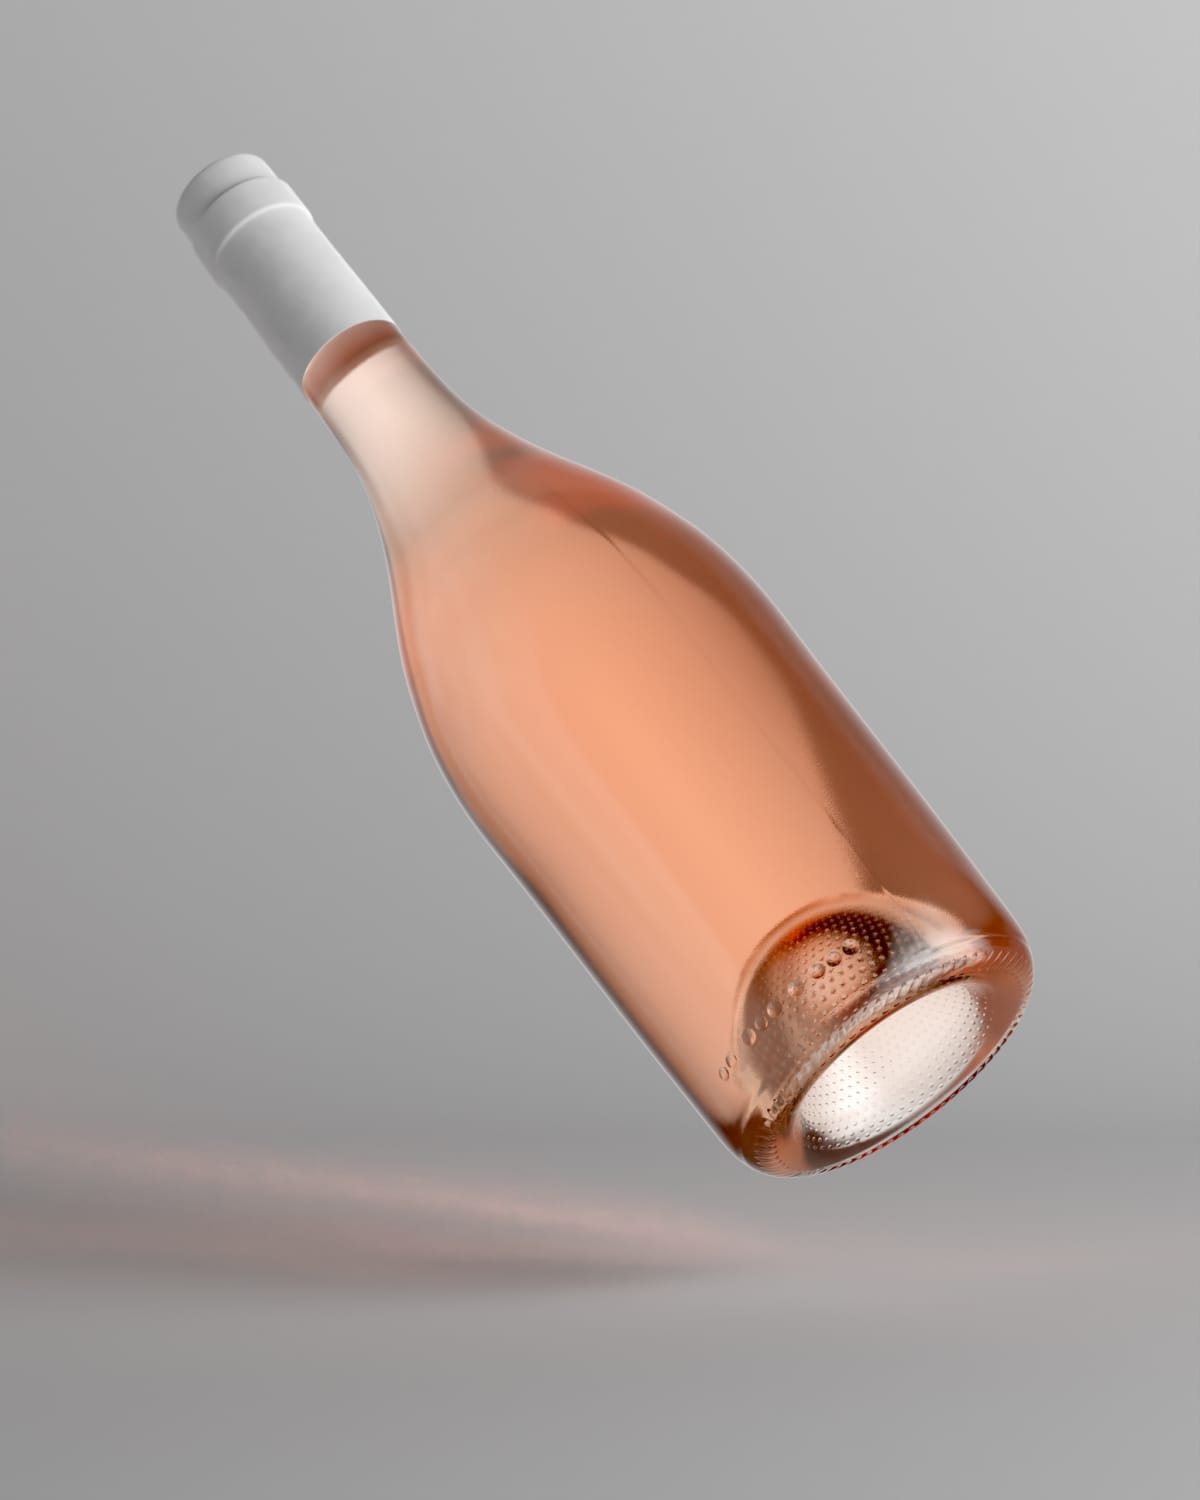 Bottle of rose wine floating against a grey background